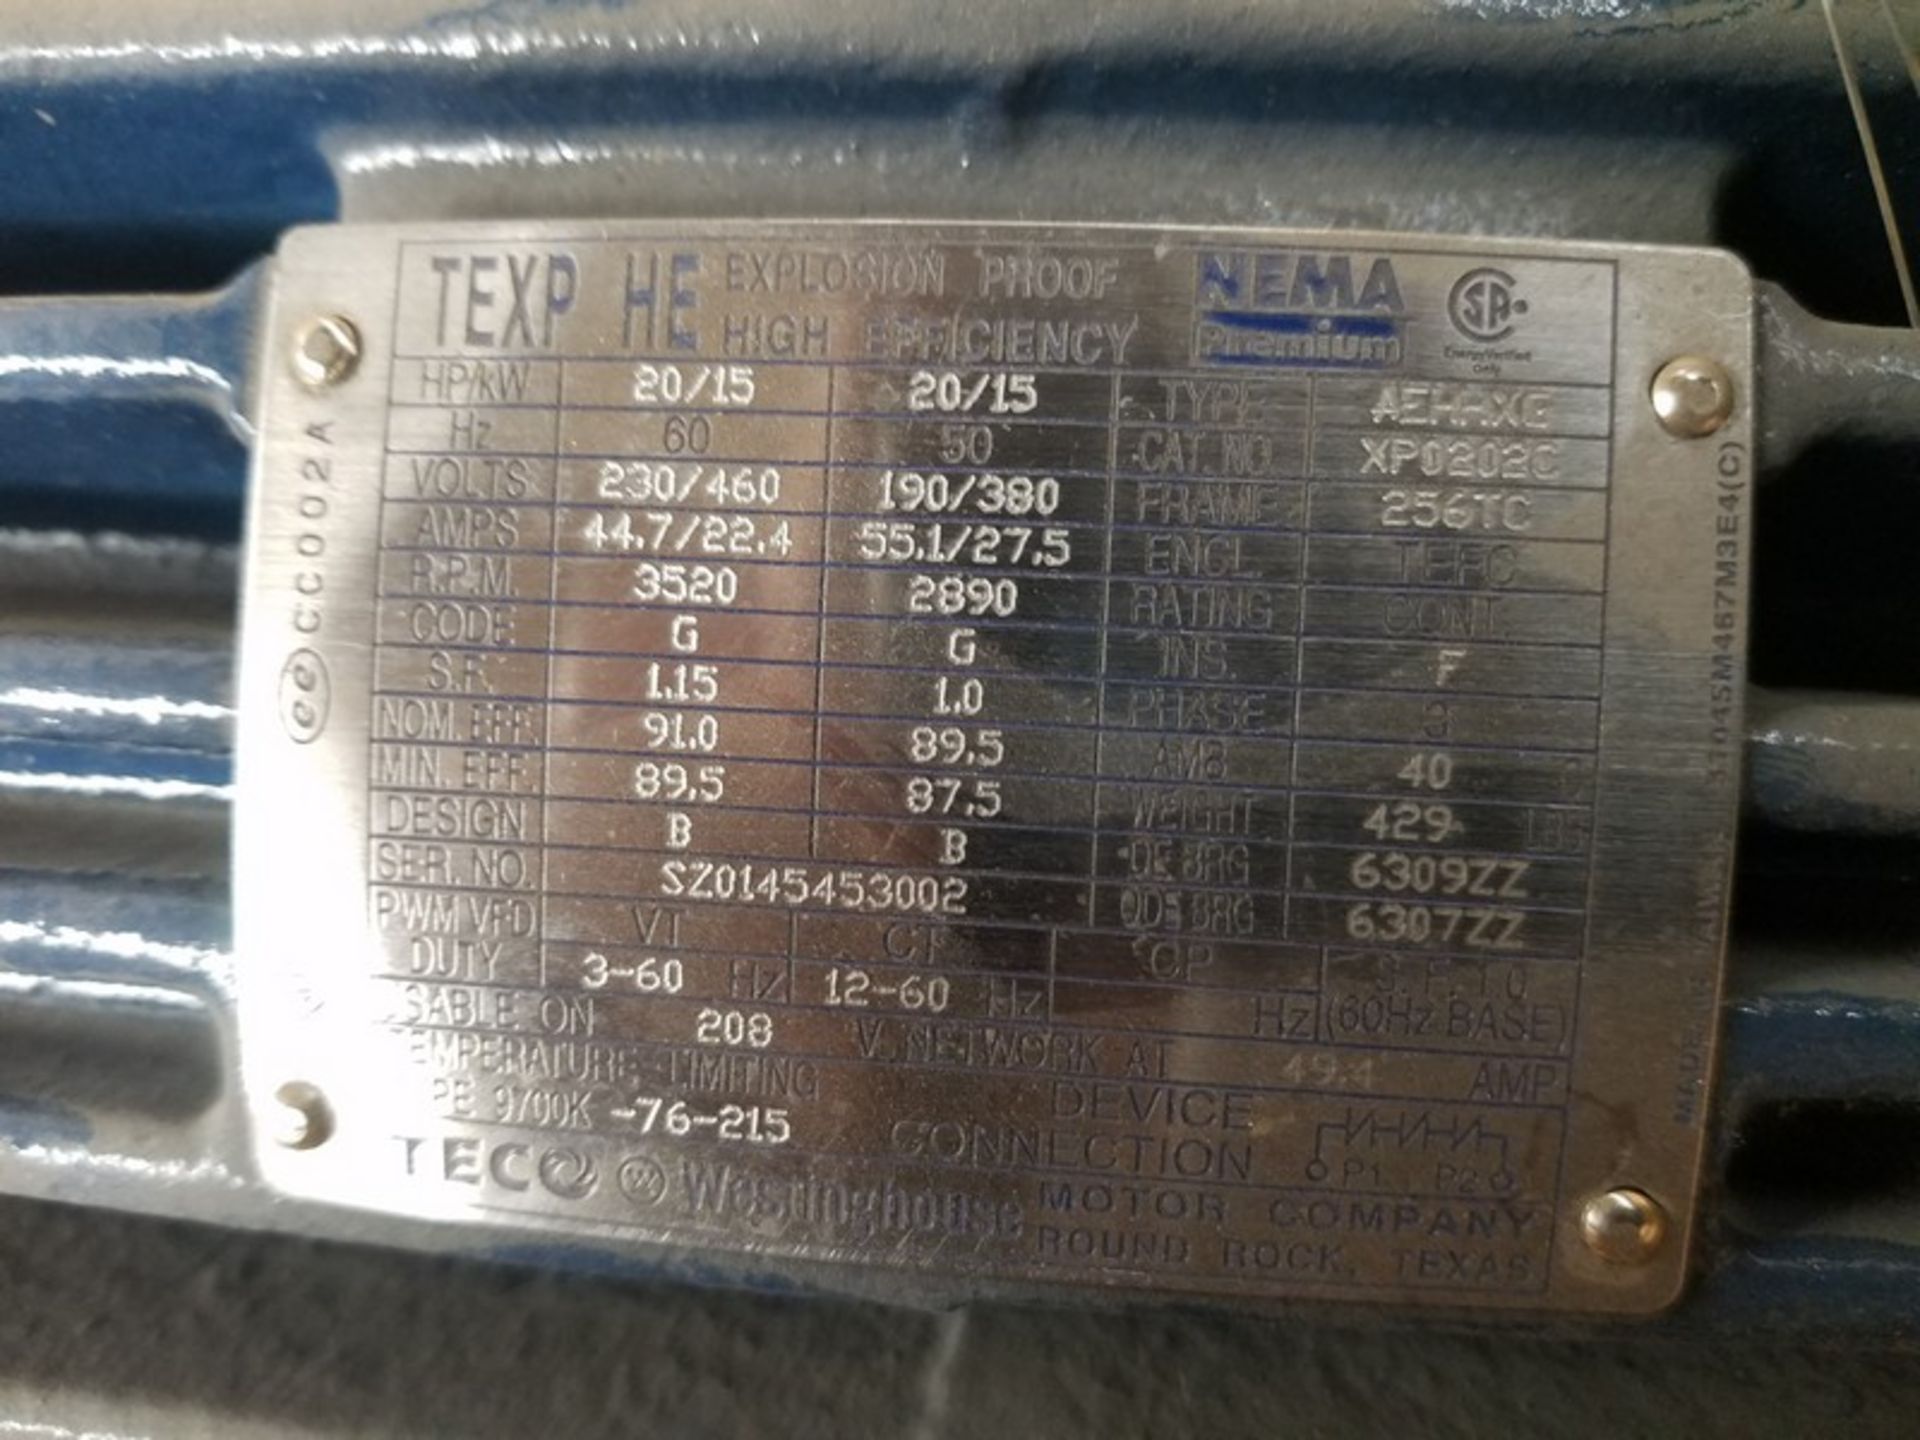 Teco Westinghouse AEHHAG explosion proof motor. HP 20, volt 230/460, 3-phase, FM 256TC, RPM 3520 ( - Image 4 of 4